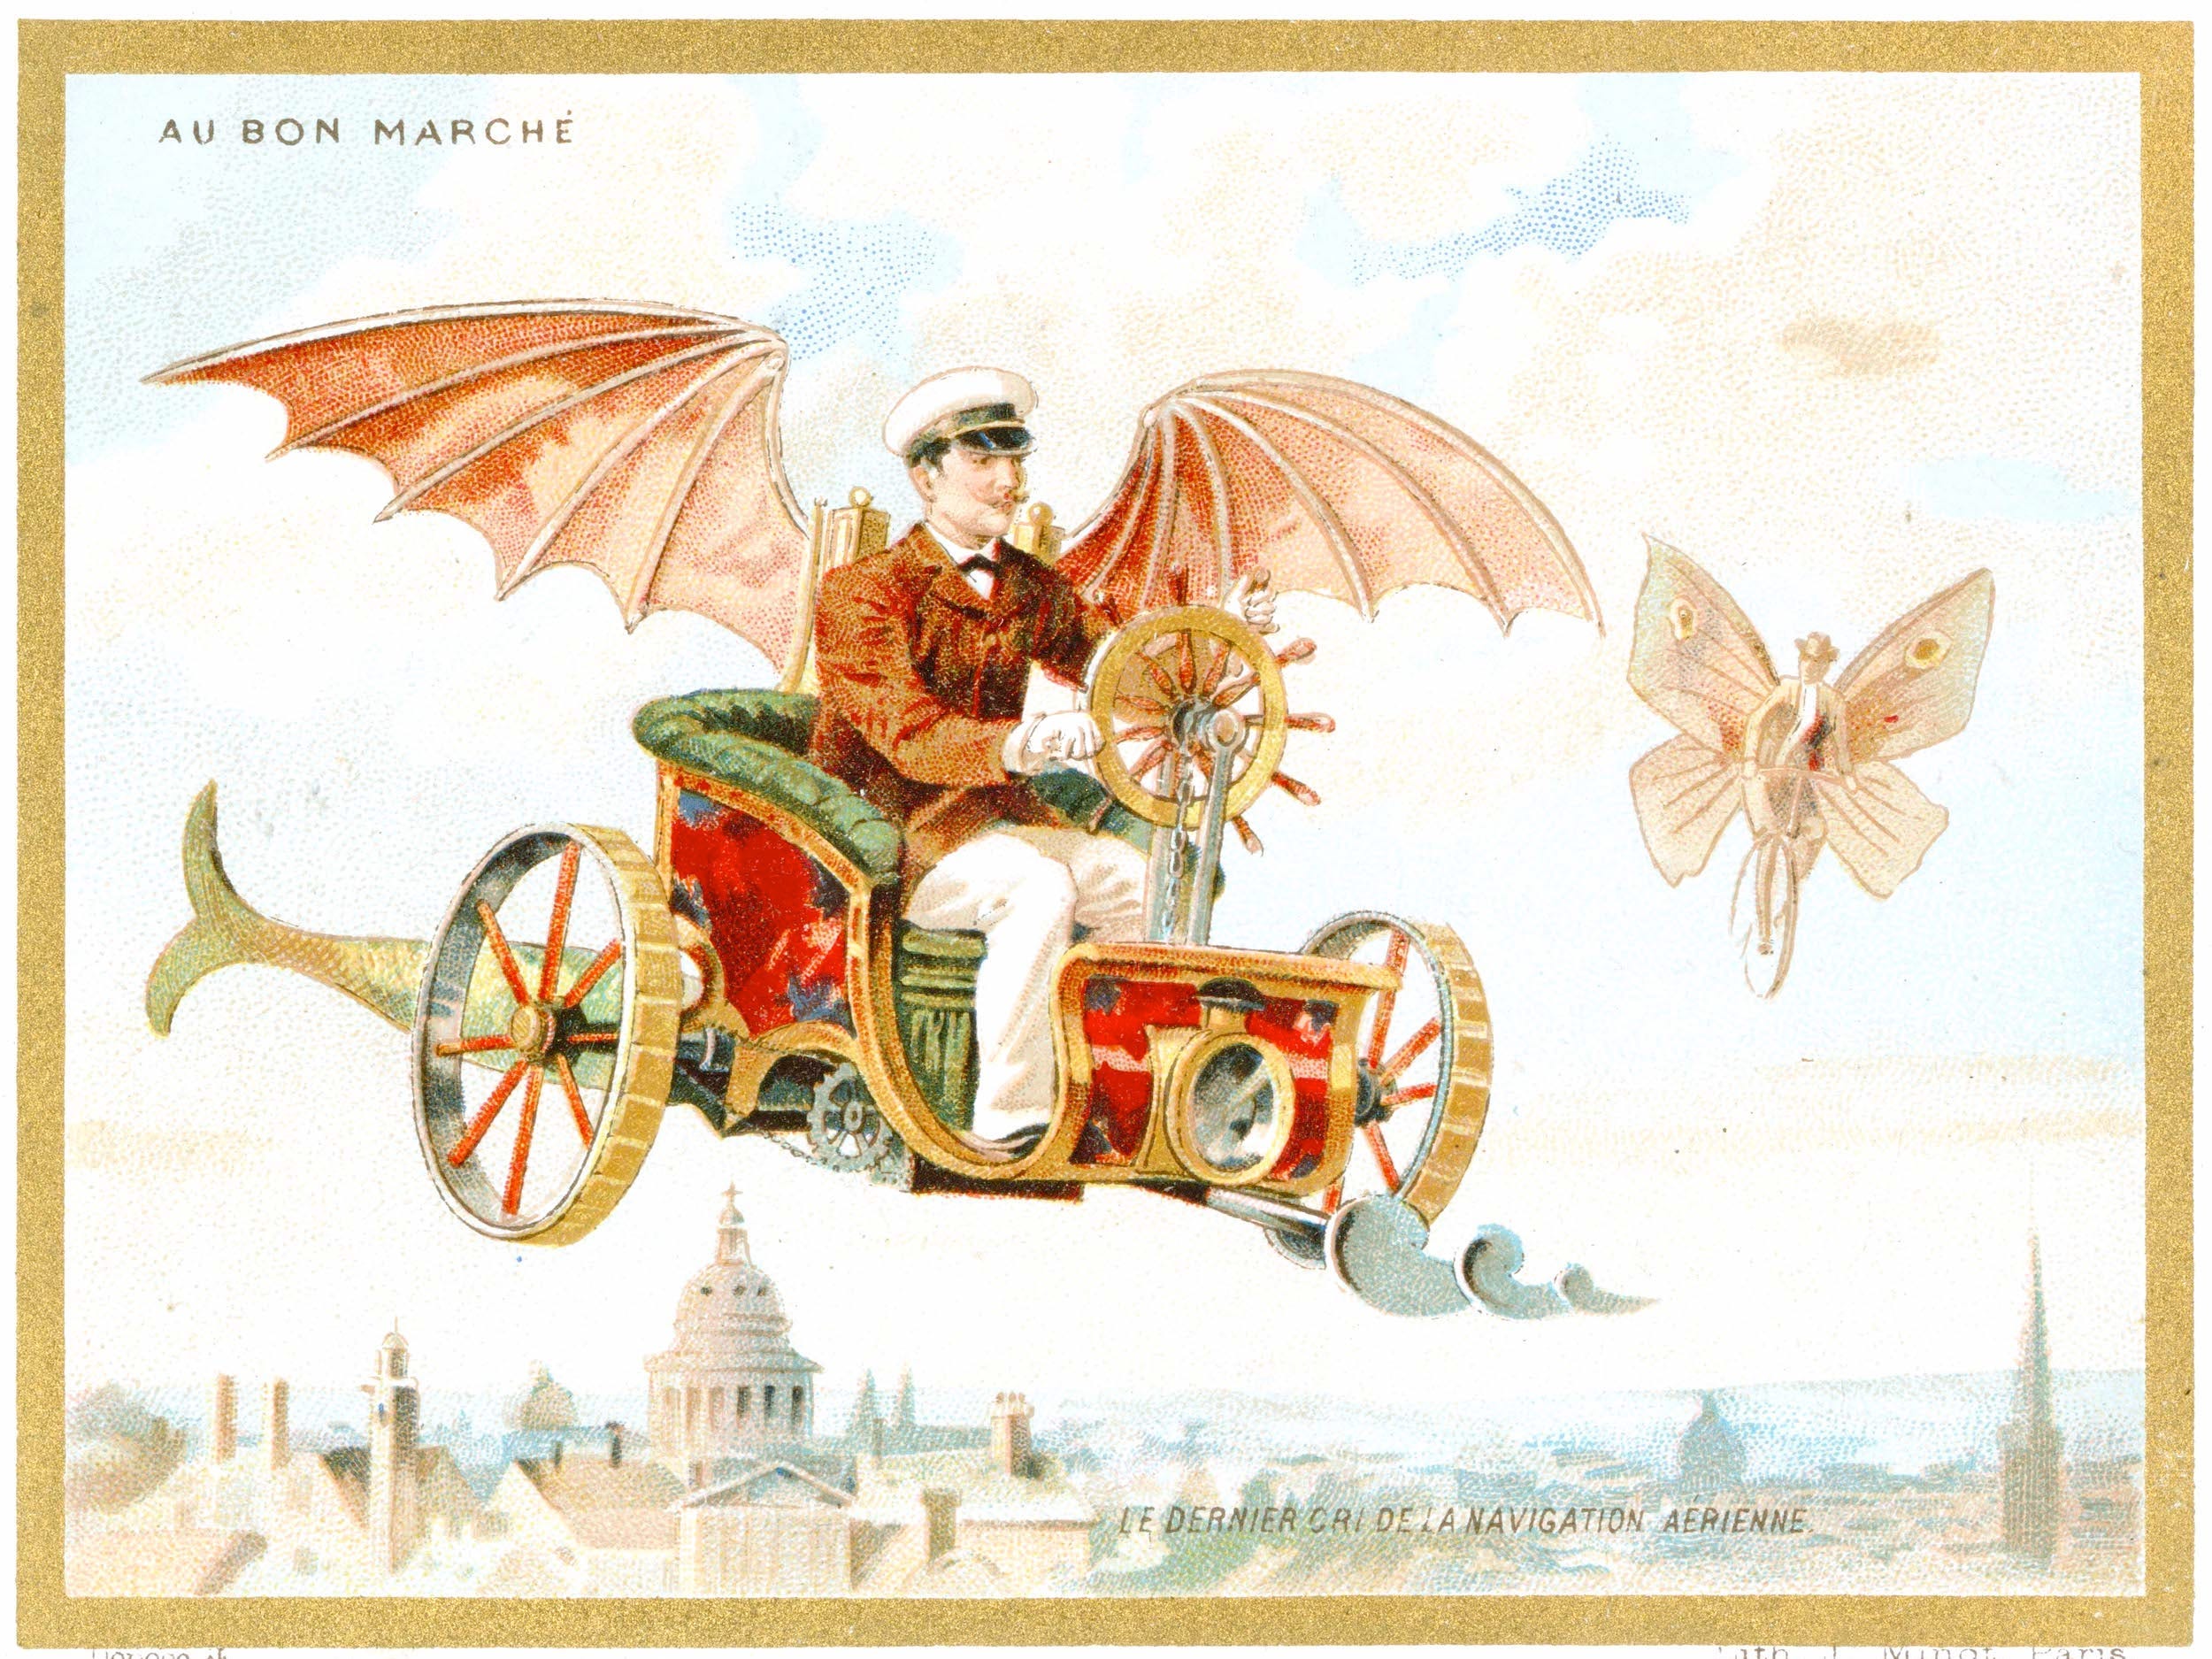 A futuristic ad card depicting a flying car from the Au Bon Marce company